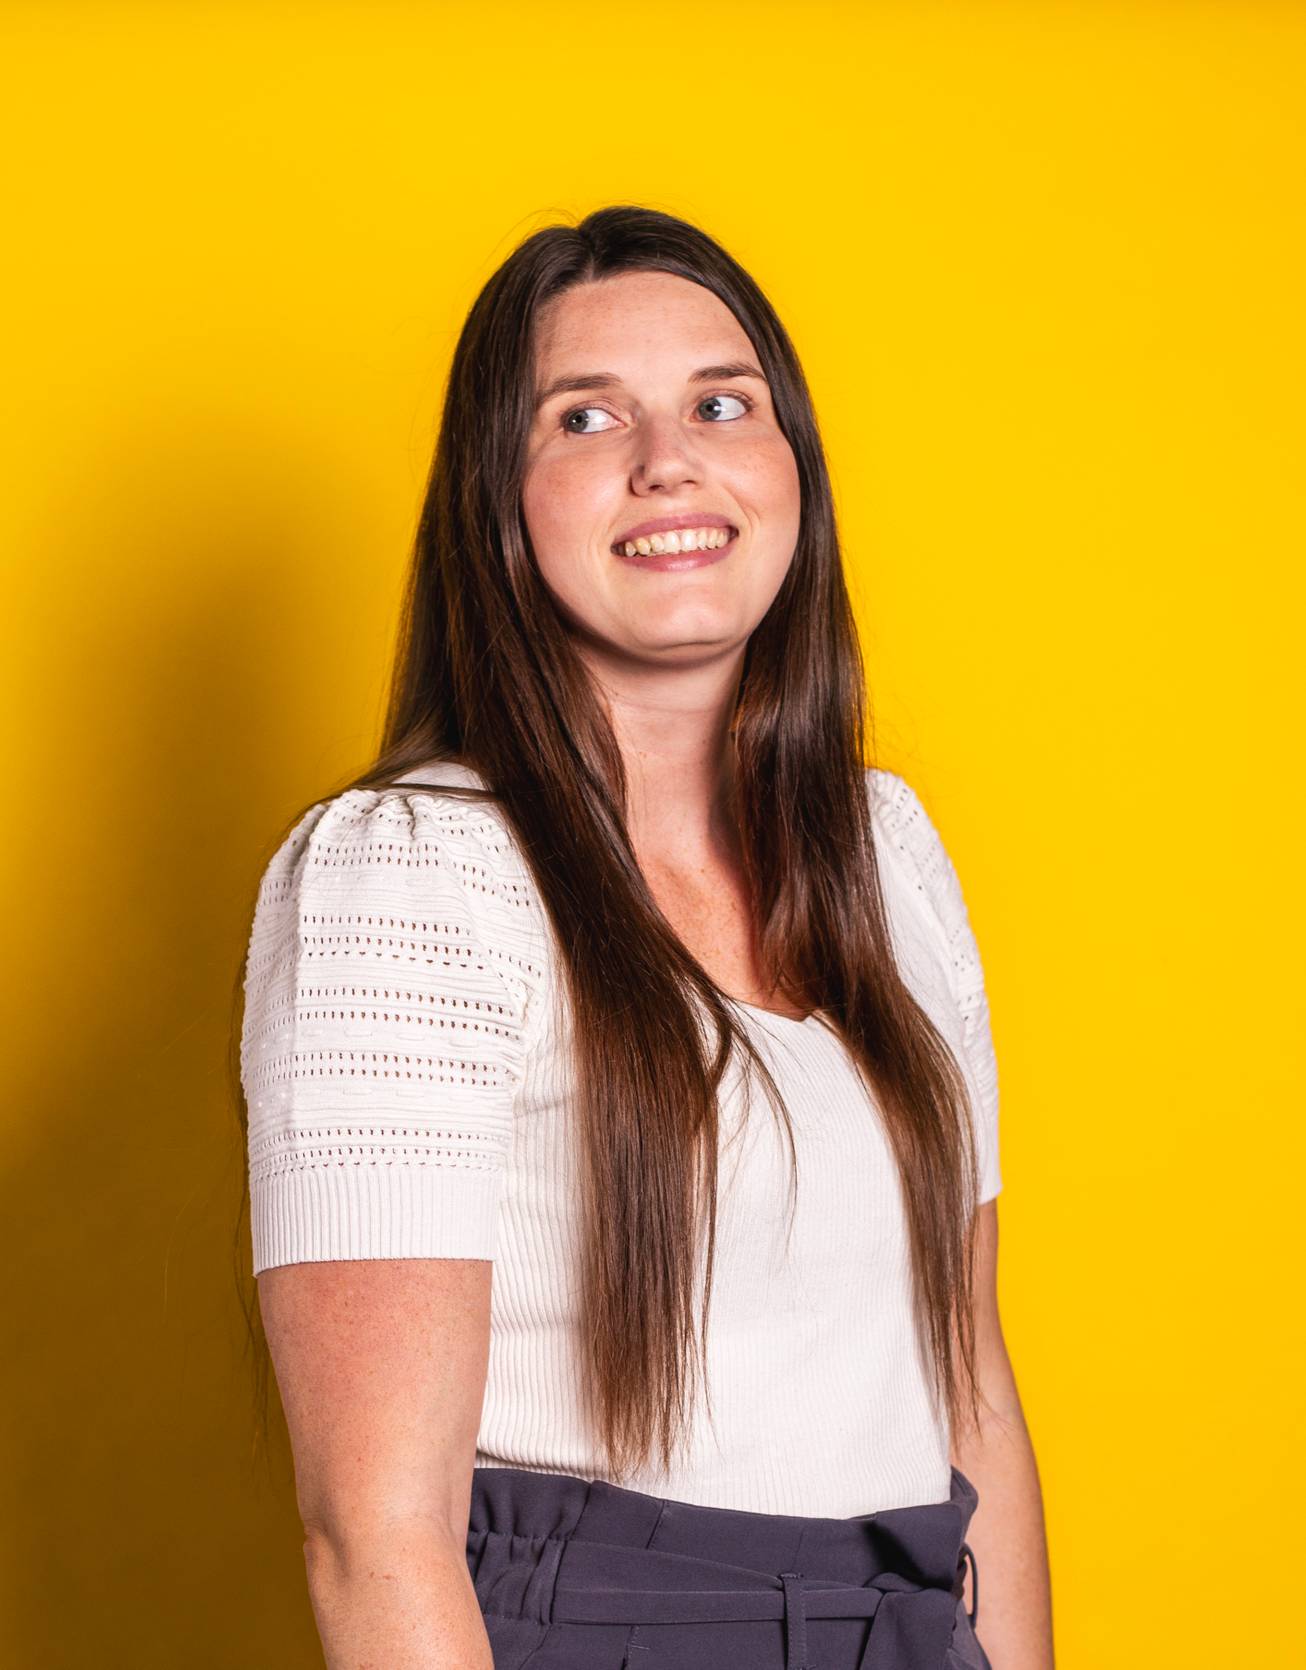 Annabel Goard profile photo on yellow background